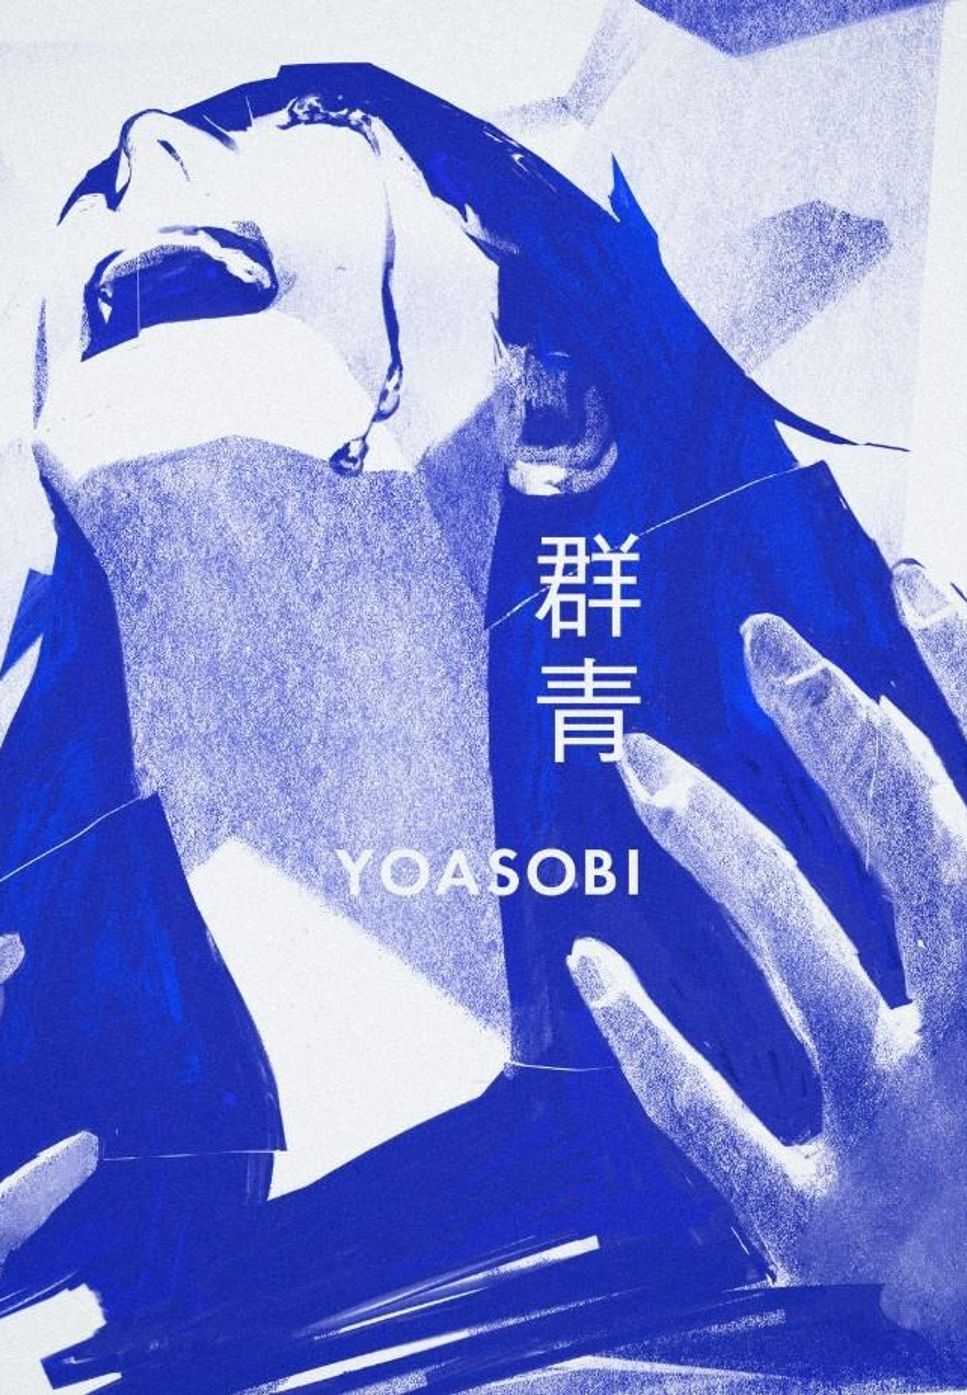 YOASOBI - 群青 by freestyle pianoman